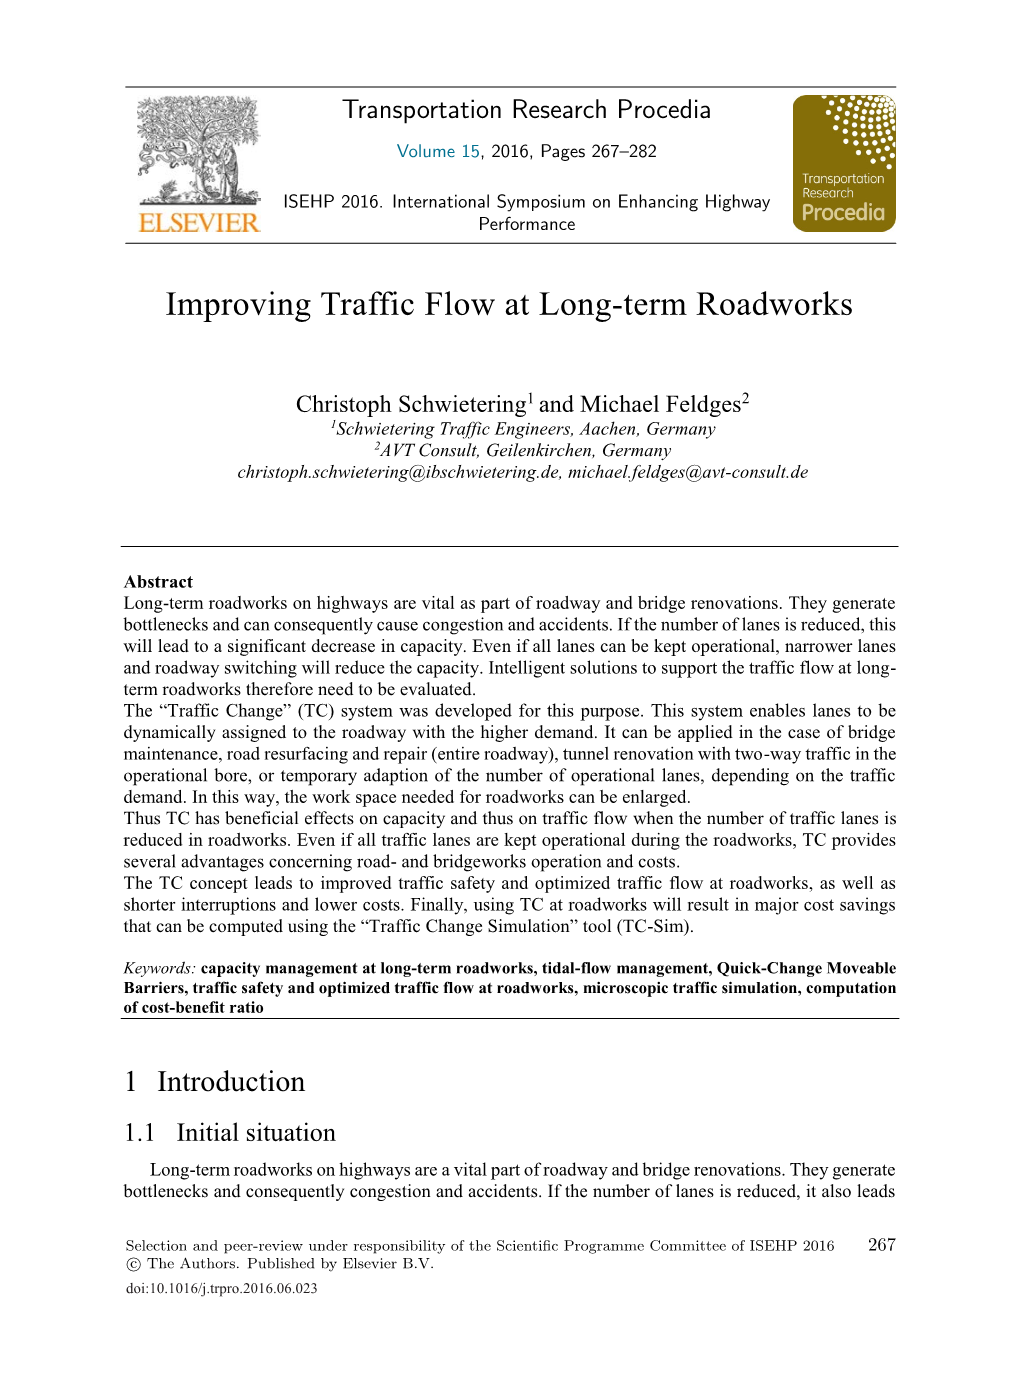 Improving Traffic Flow at Long-Term Roadworks